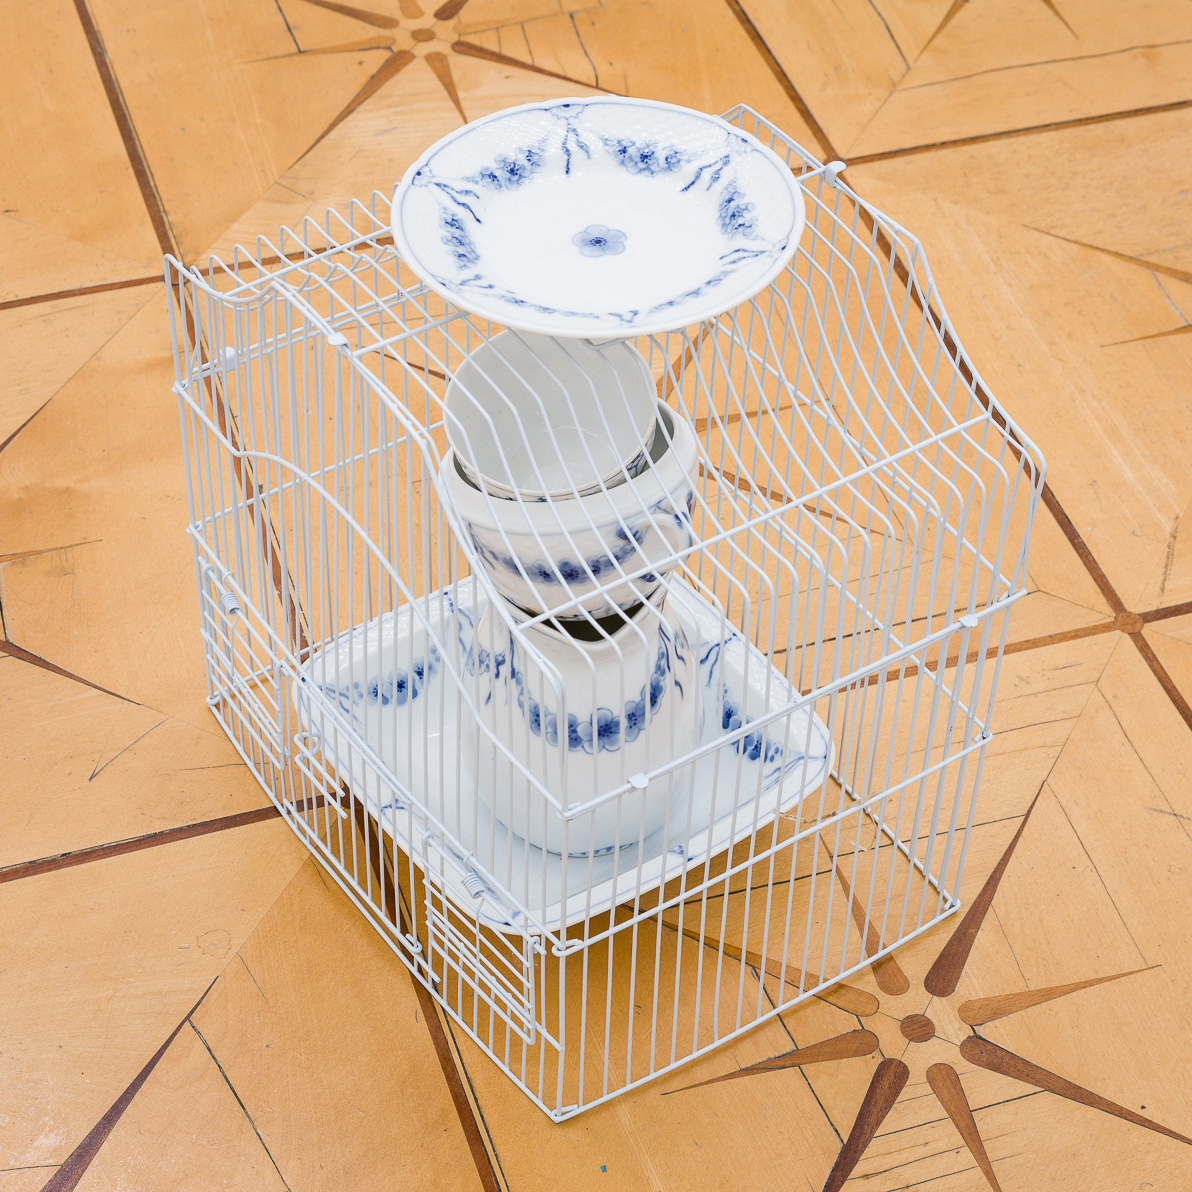 Feature | Nina Beier’s Porcelain Dinnerware Inhabits Birdcages